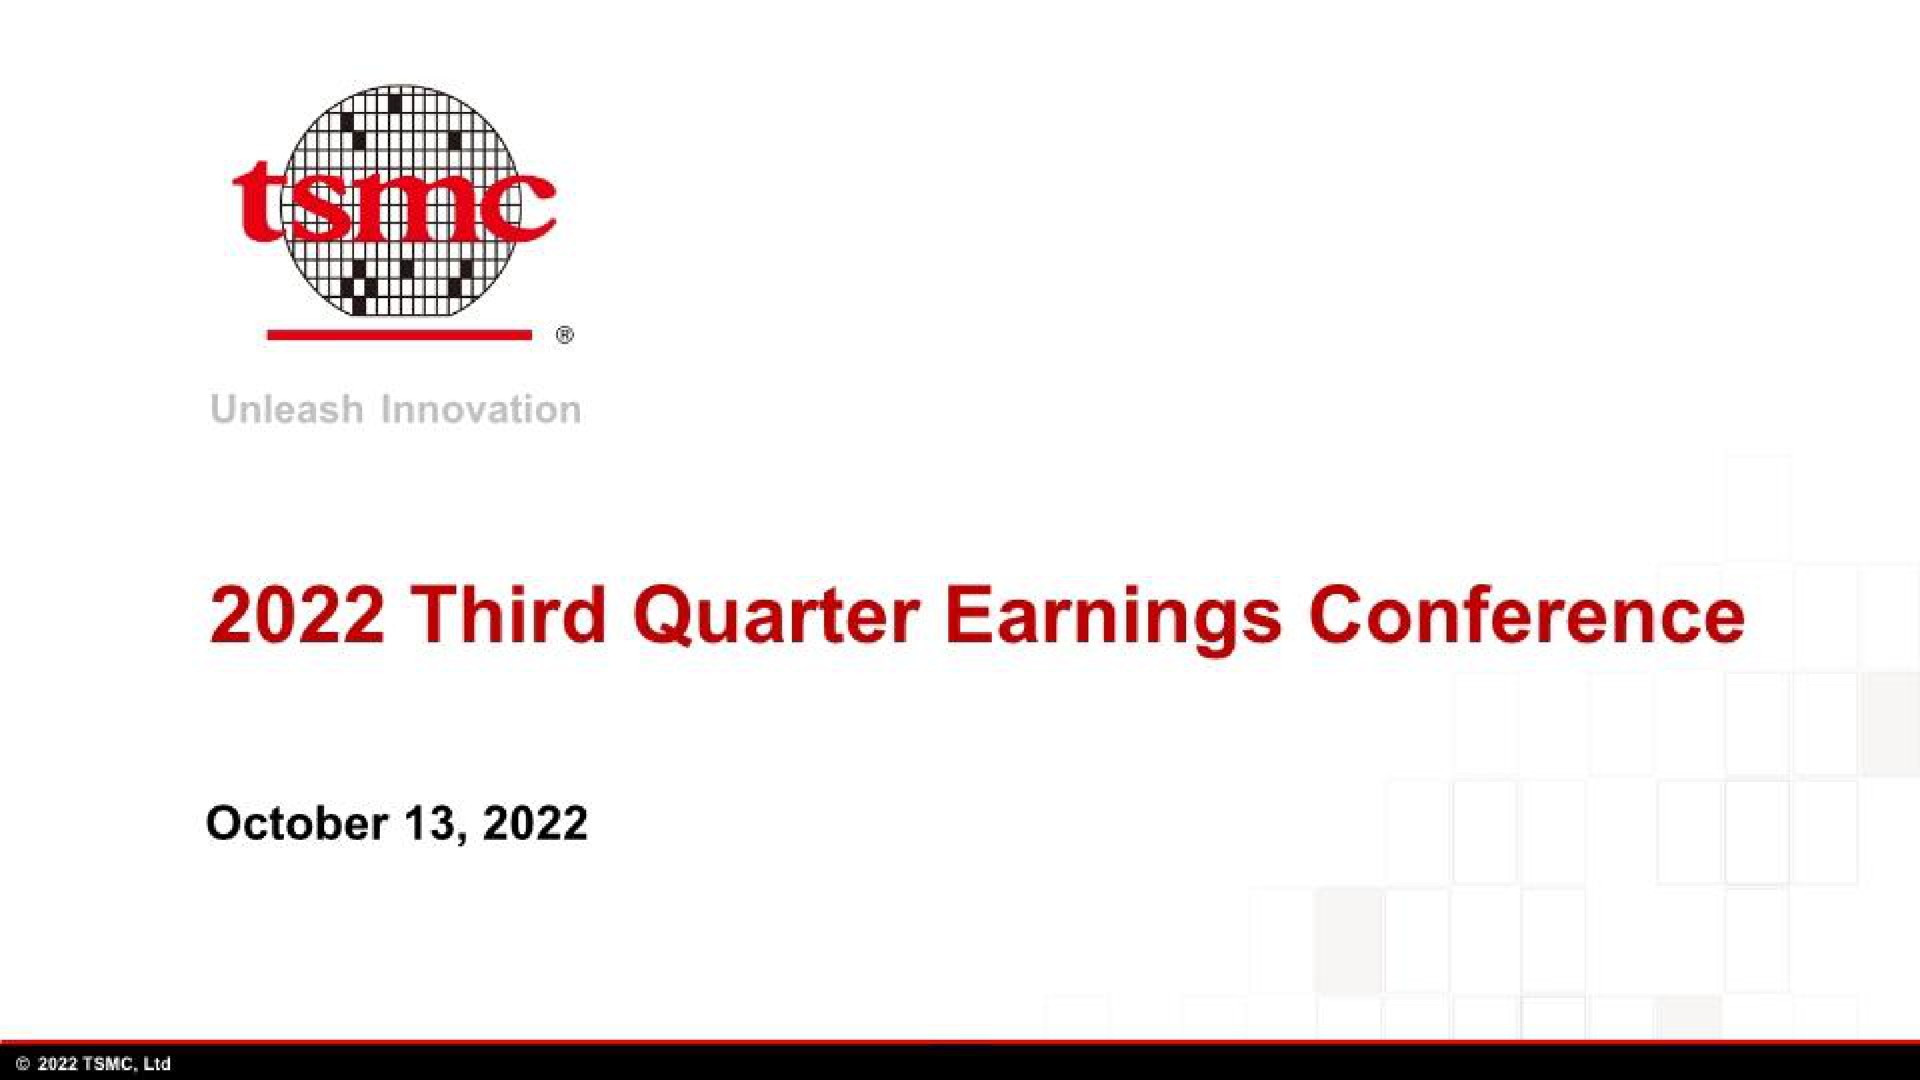 third quarter earnings conference | TSMC